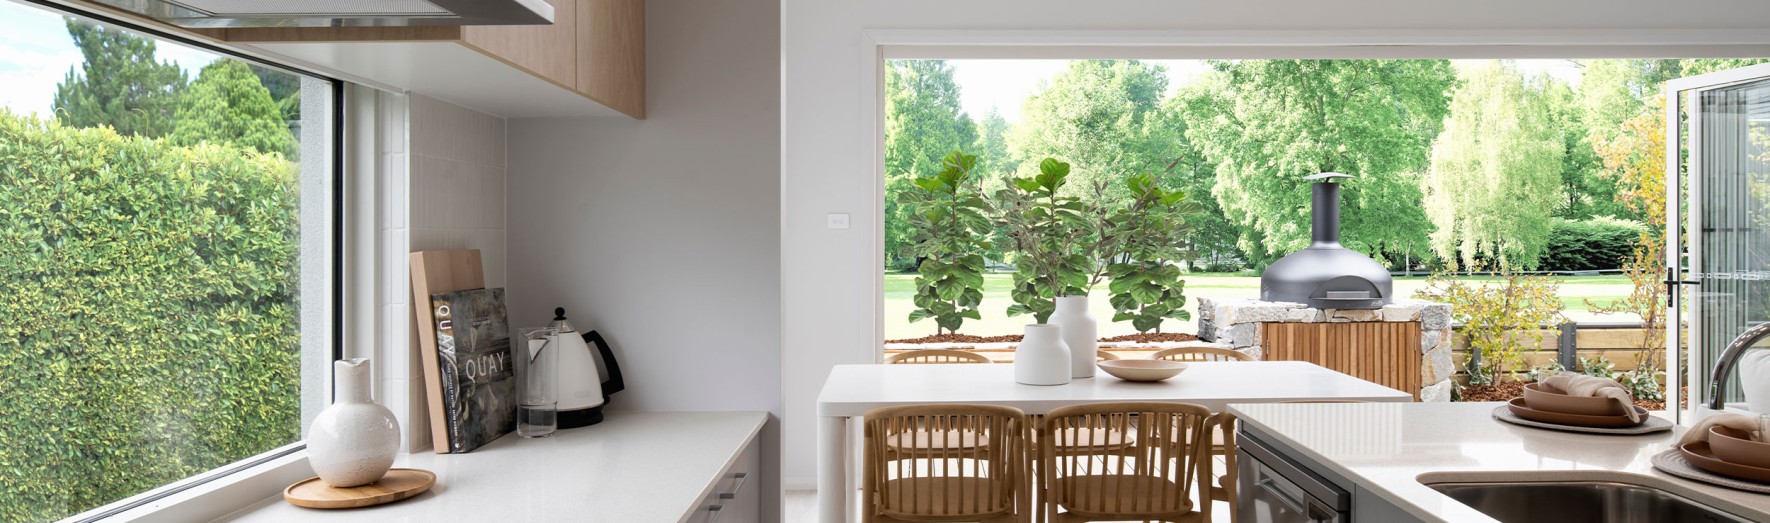 alpha-17-single-storey-home-design-kitchen-dining